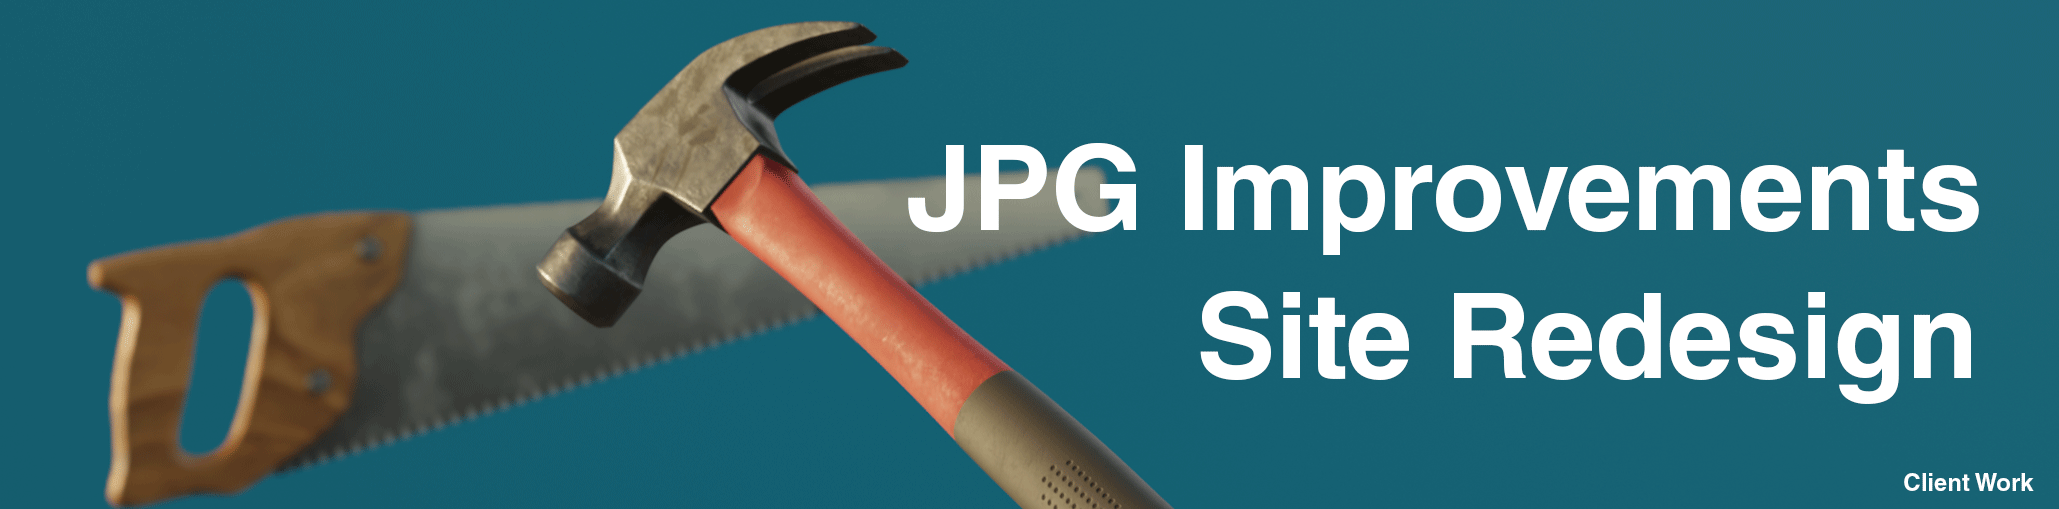 JPG-CS-Image